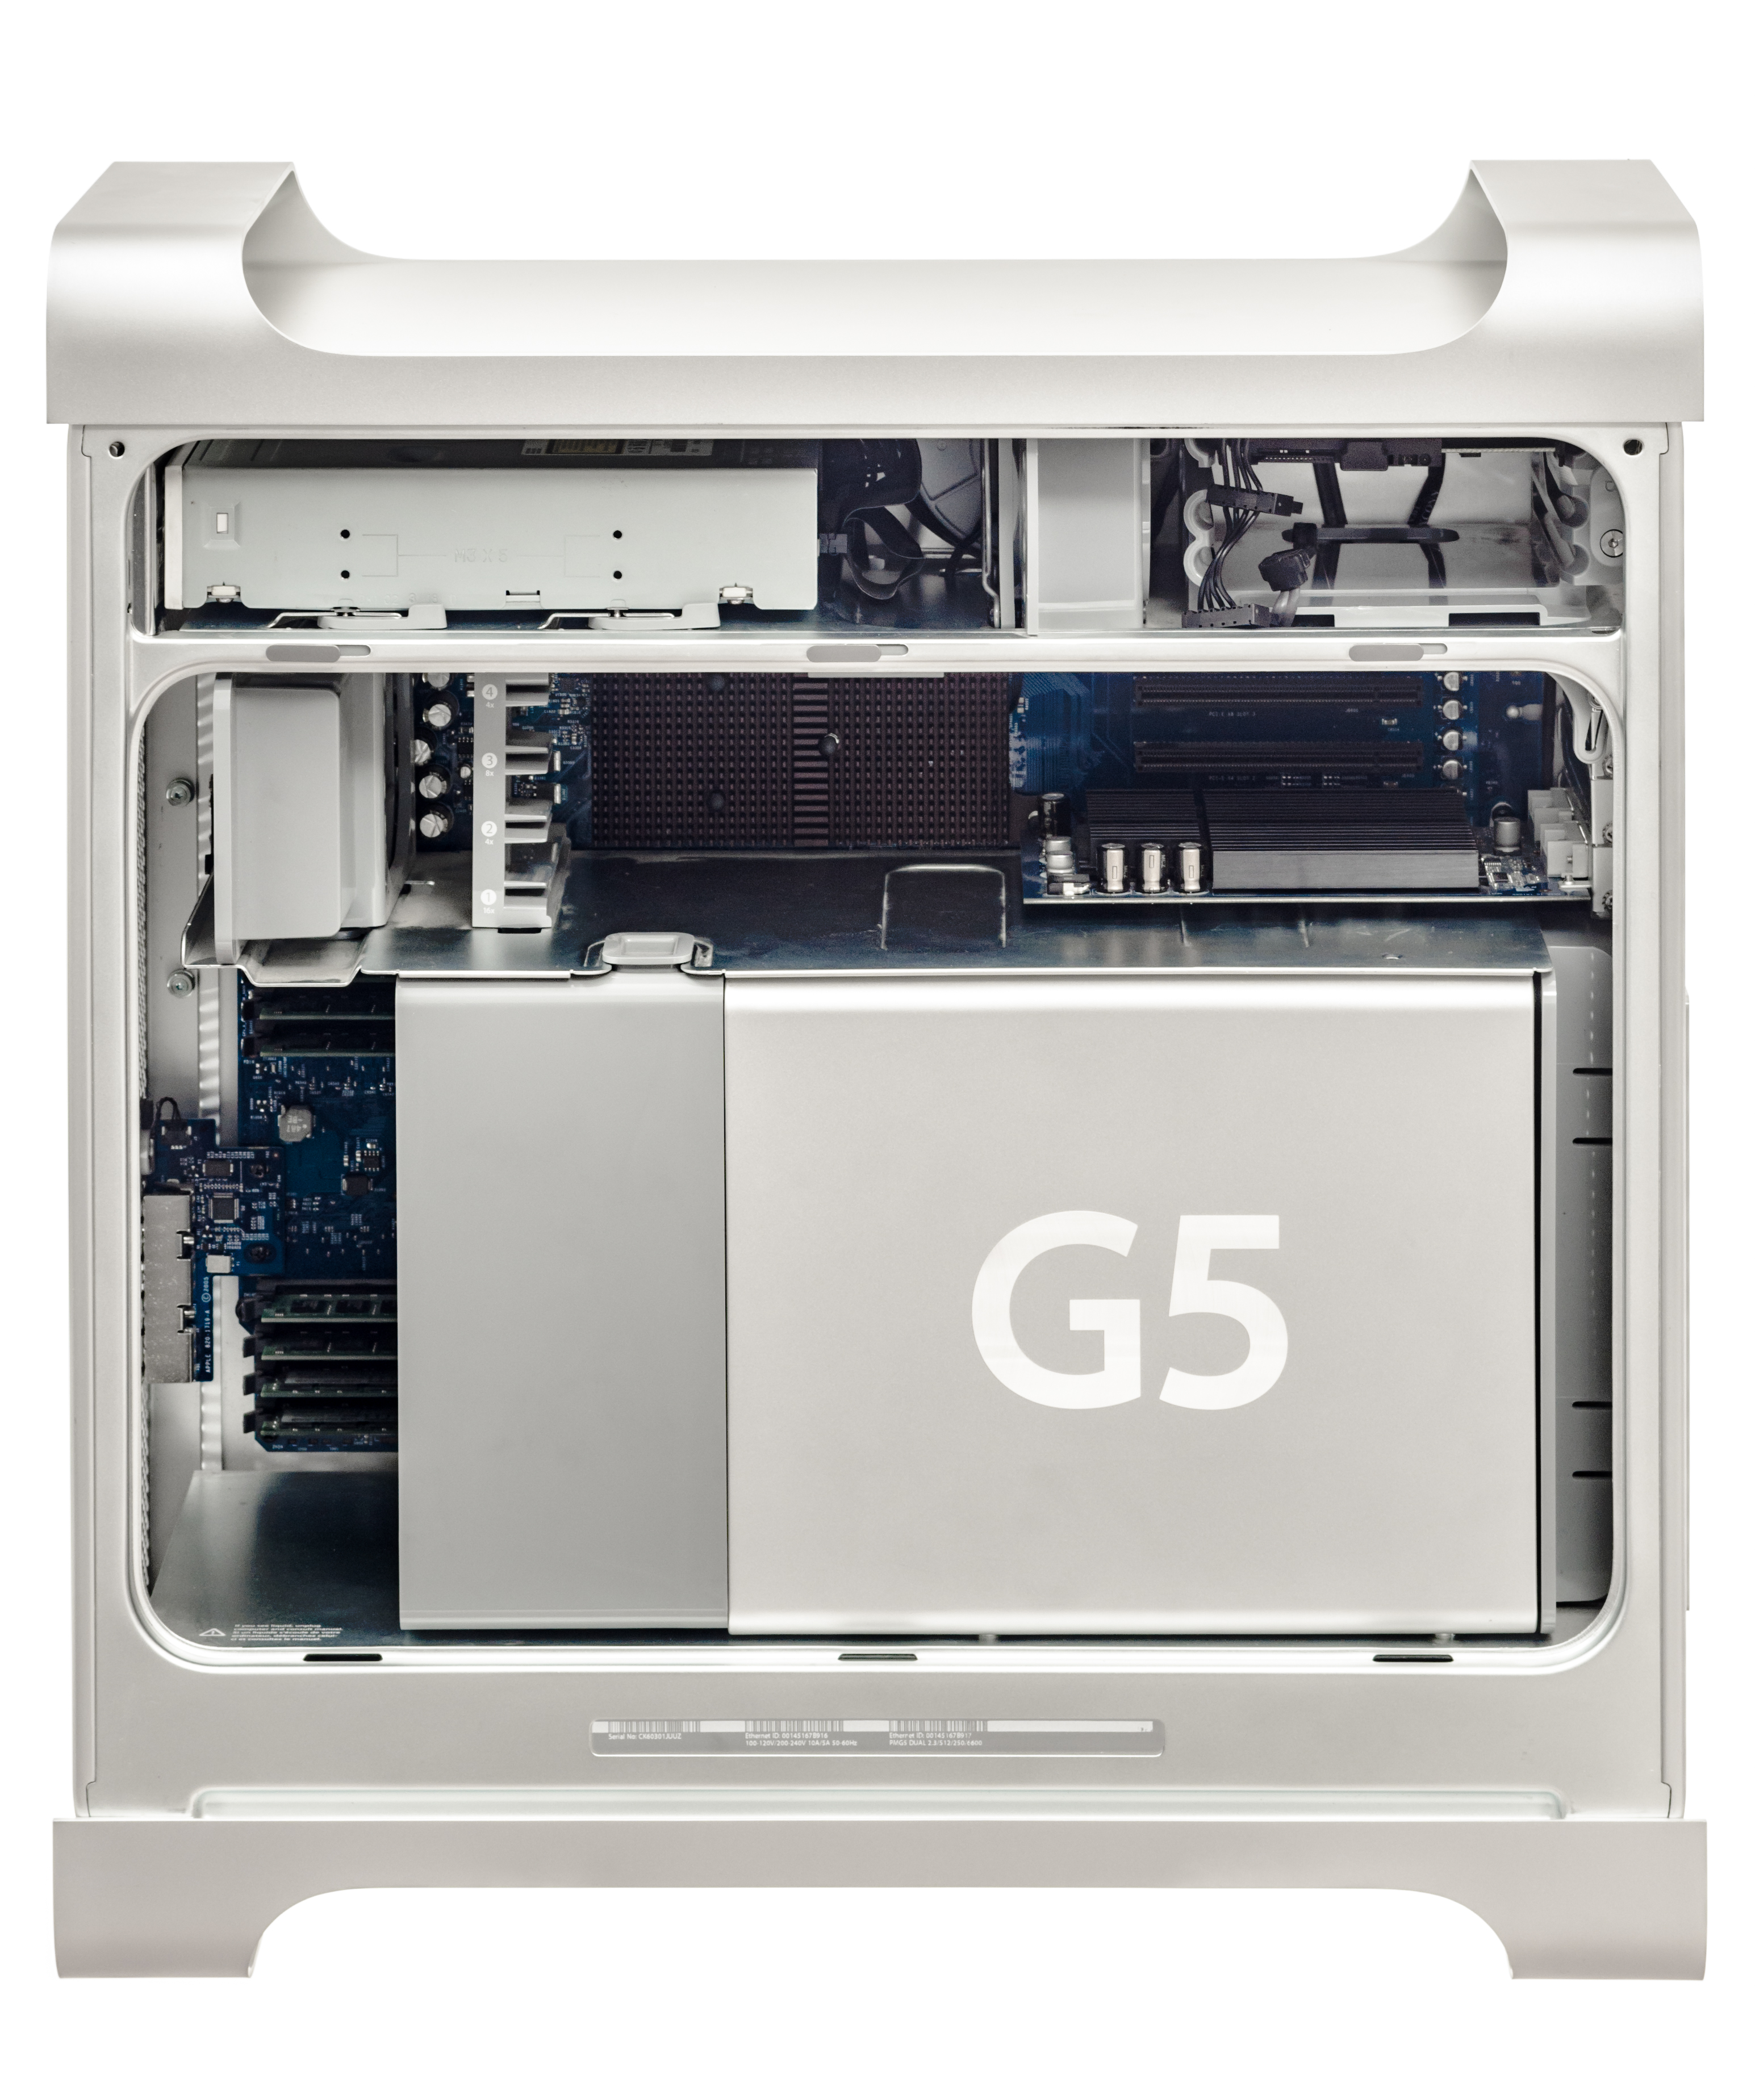 Mac pro g5